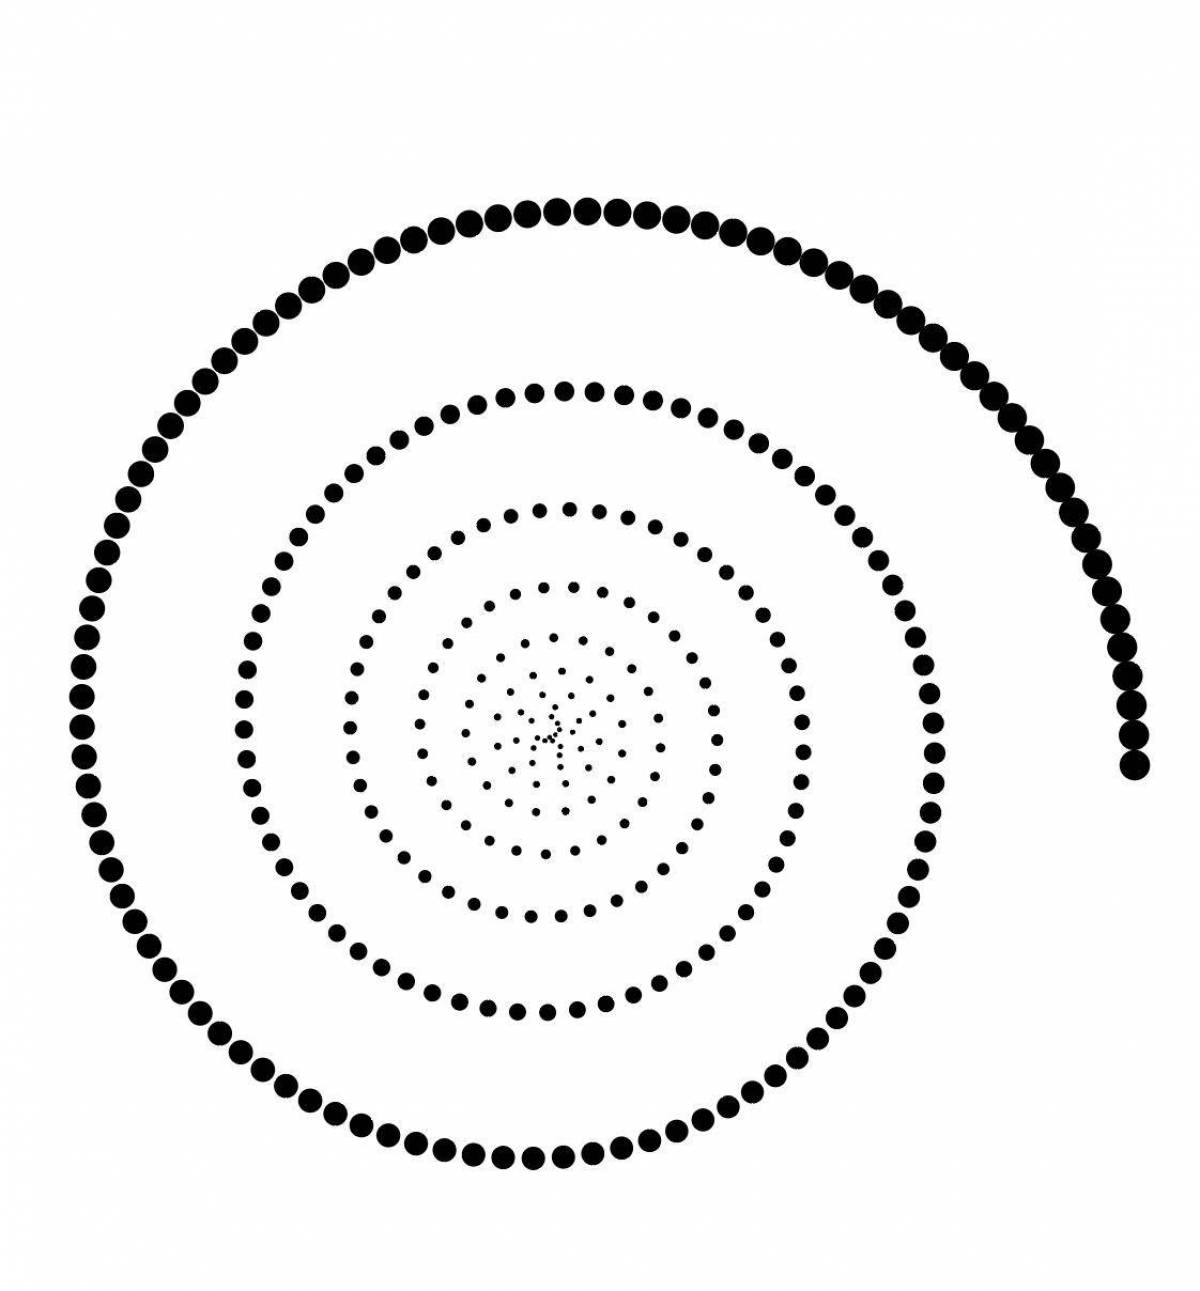 Amazing circle pattern spiral coloring book